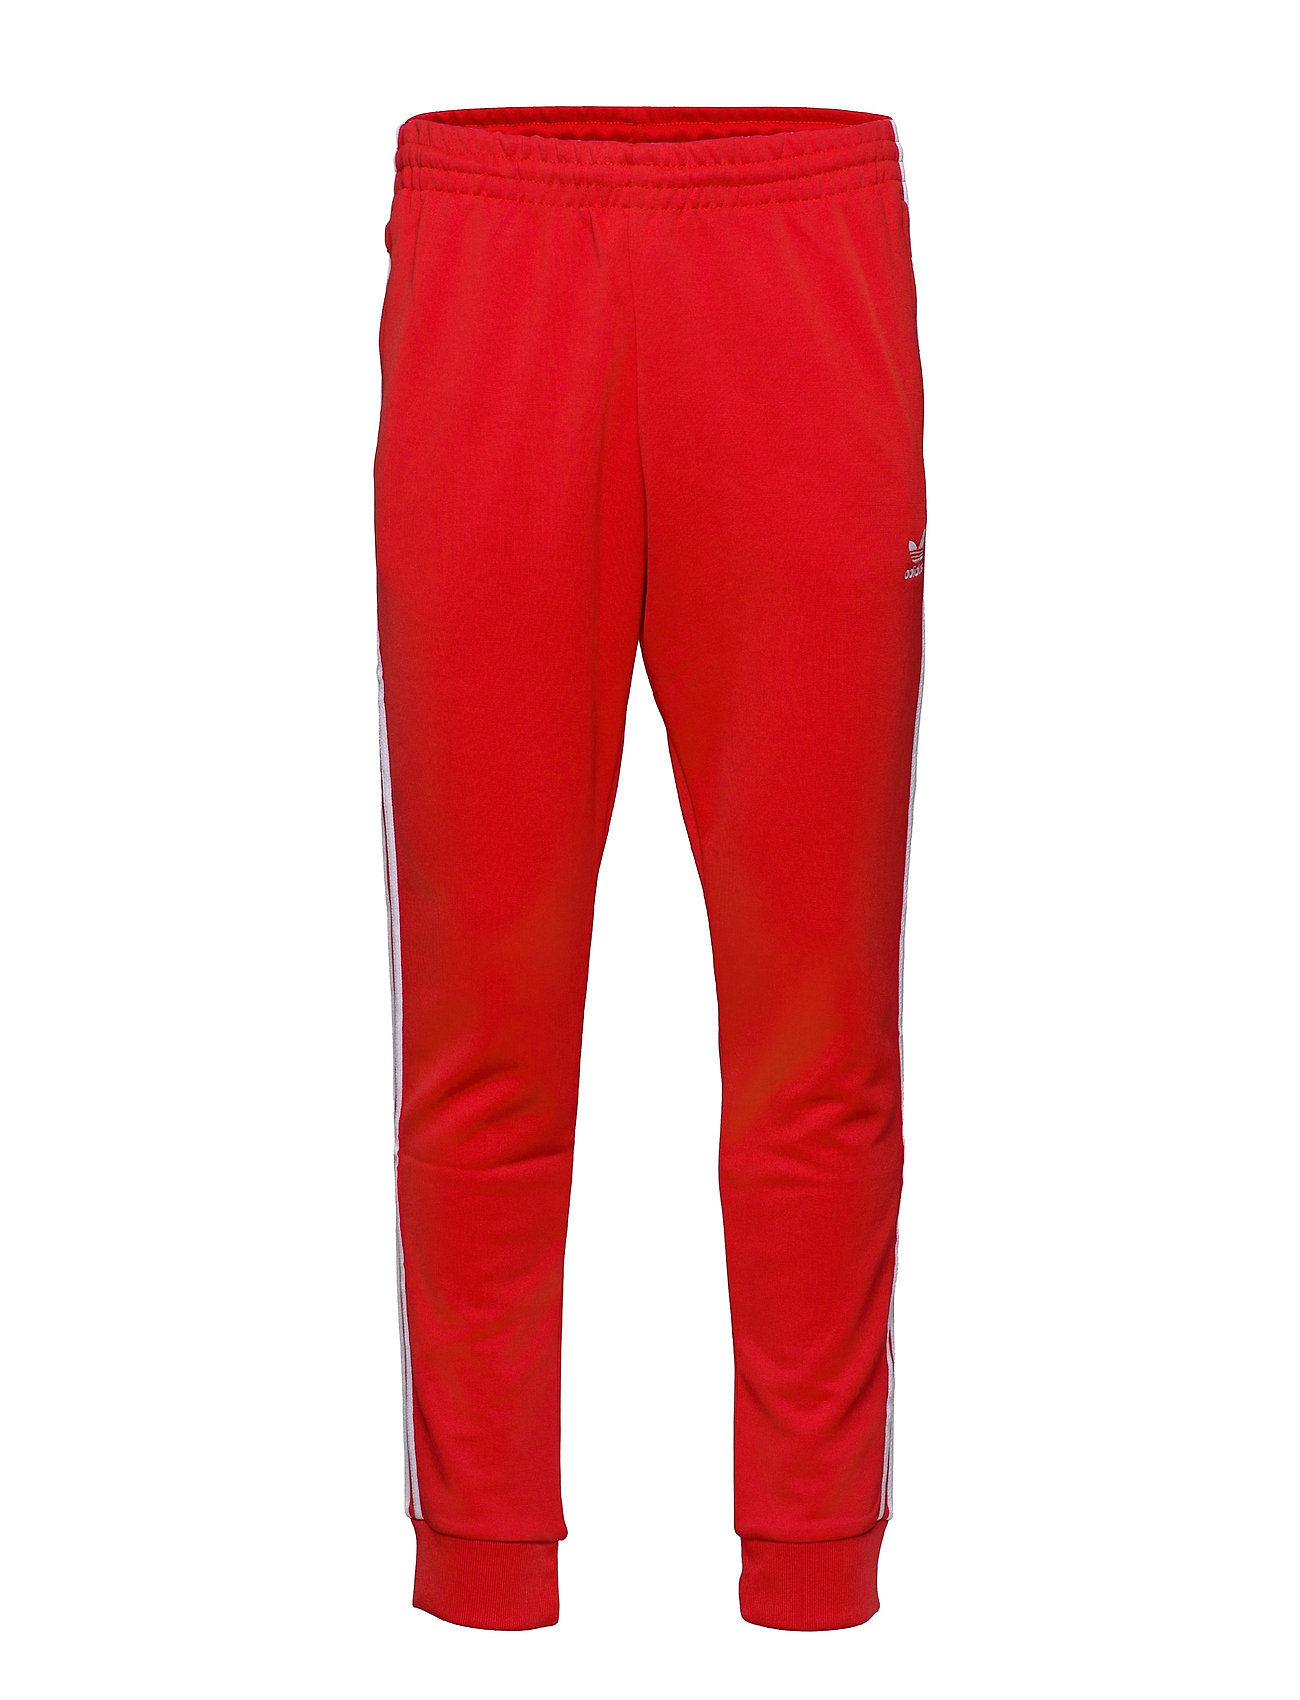 Adidas bukser – Classics Primeblue Superstar Track Pants Sweatpants Hyggebukser Rød Adidas Originals til i Rød - Pashion.dk